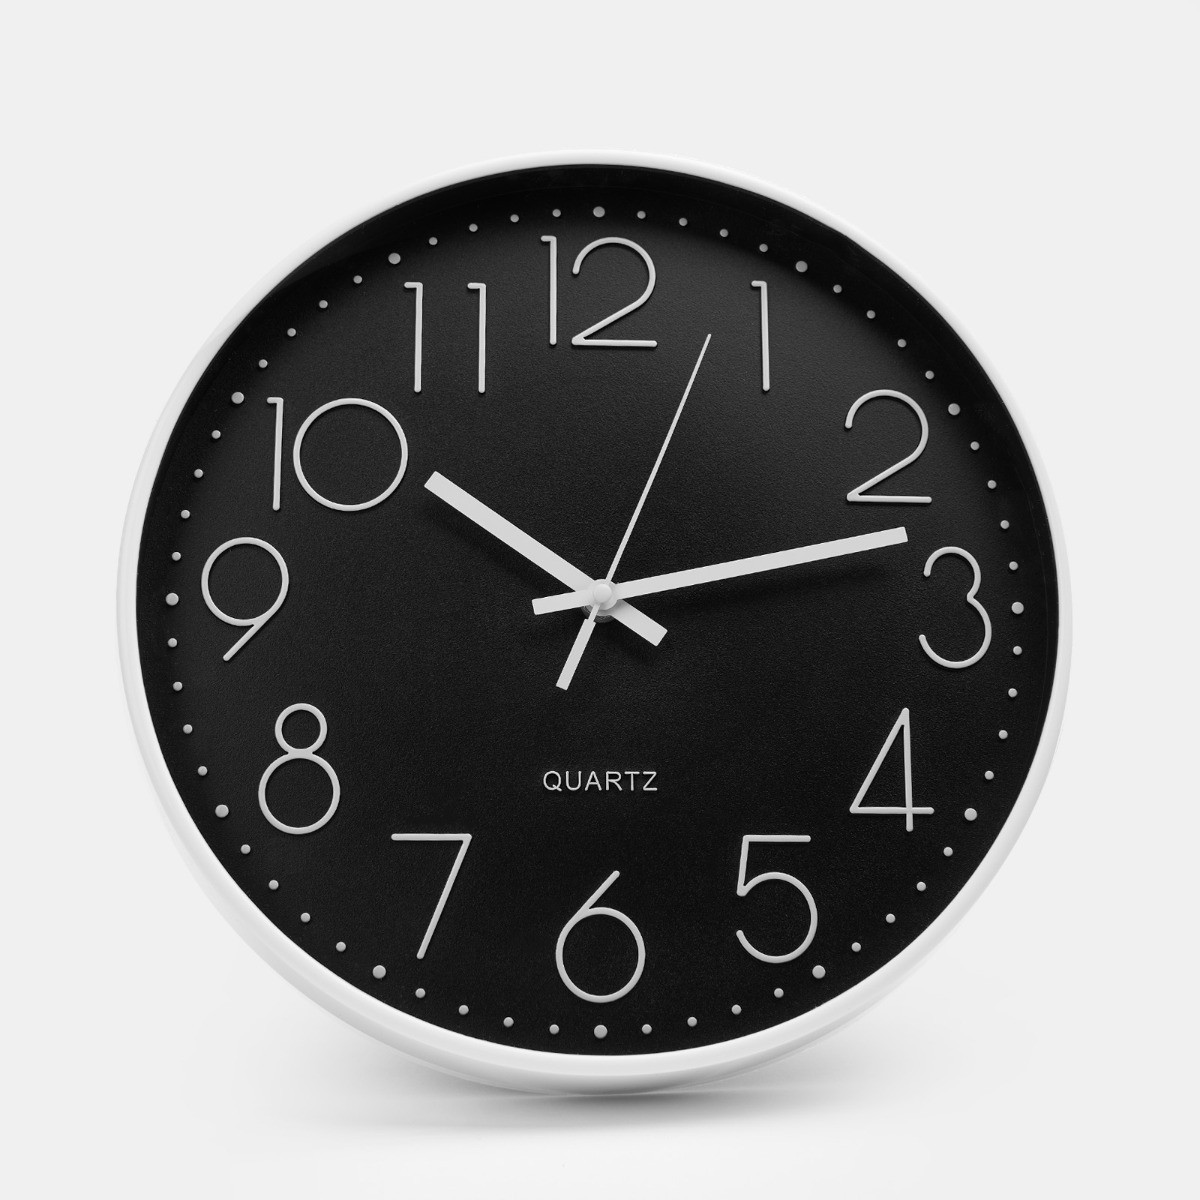 OHS Wall Clock - Black>